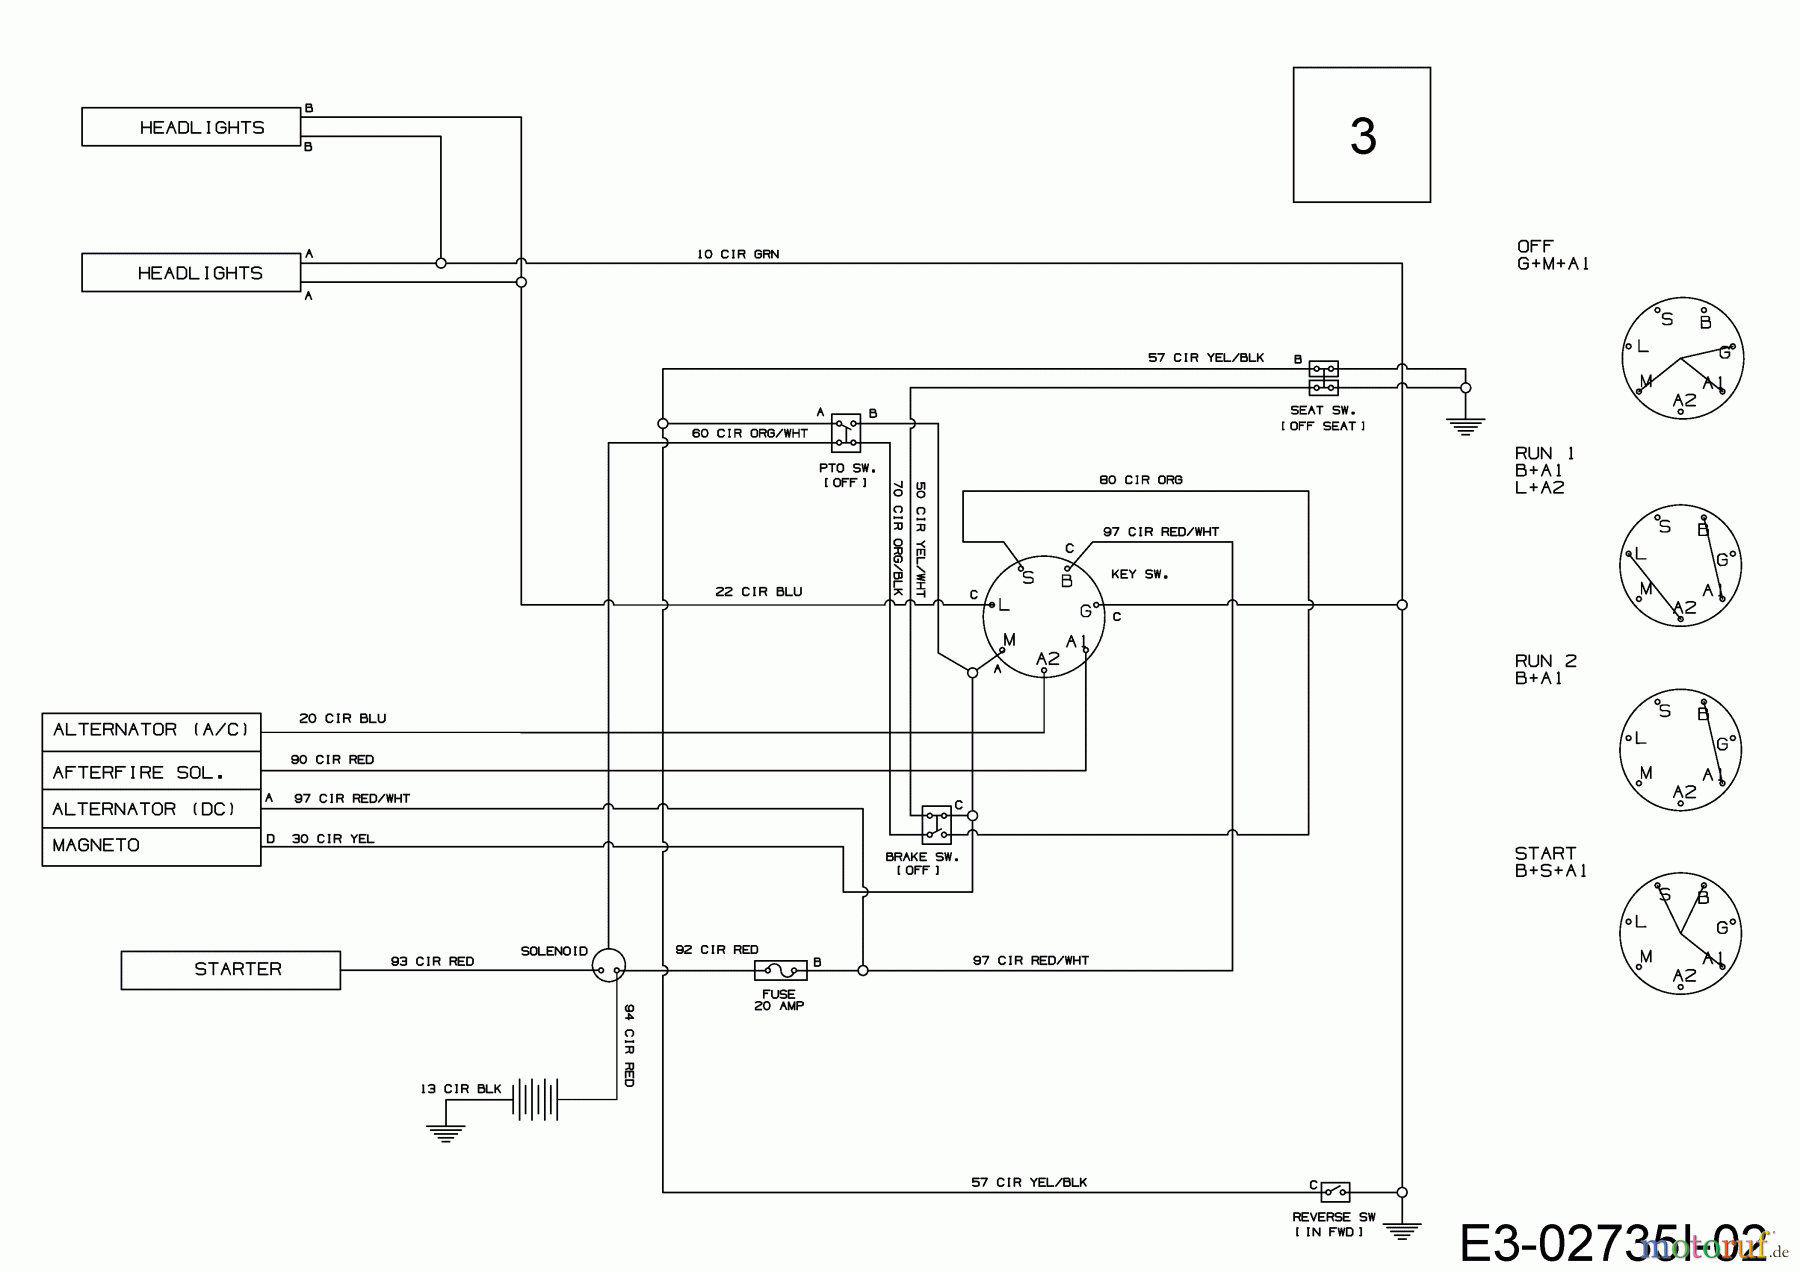  Bestgreen Lawn tractors BG 96 SBK 13A776SF655  (2020) Wiring diagram